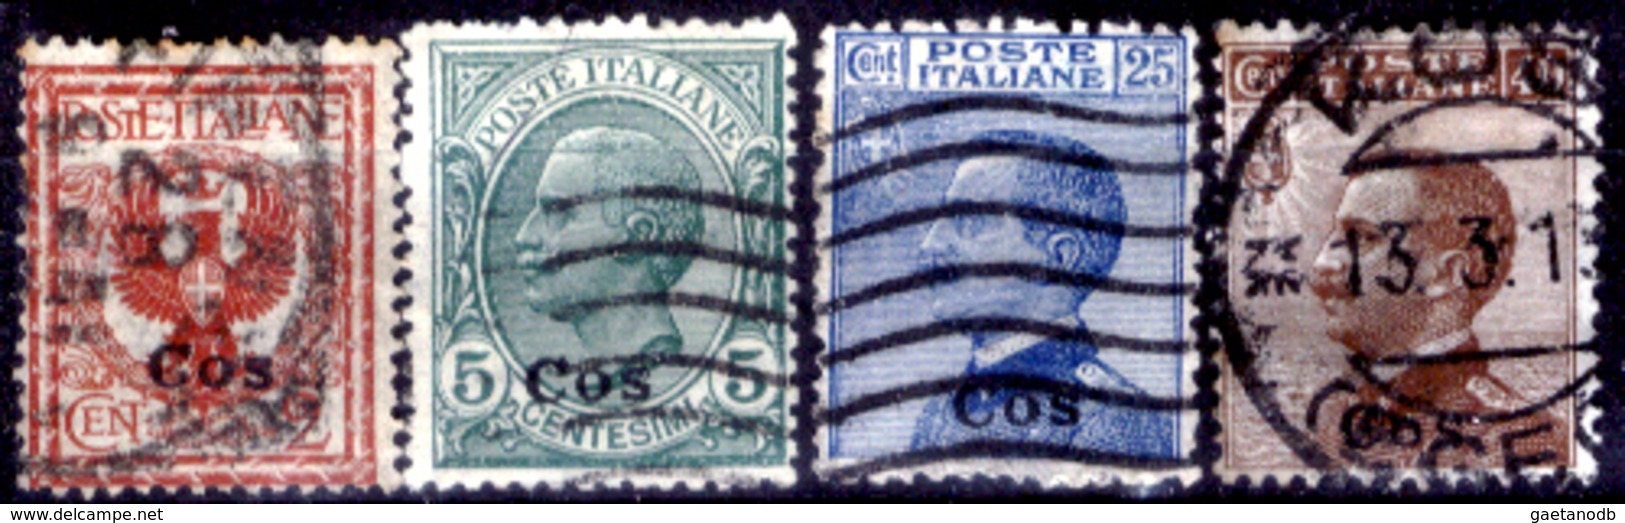 Italia-F01216 - Egeo - Coo 1912: Sassone N.  1, 2, 5, 6 (o) Used - Privo Di Difetti Occulti - Aegean (Coo)